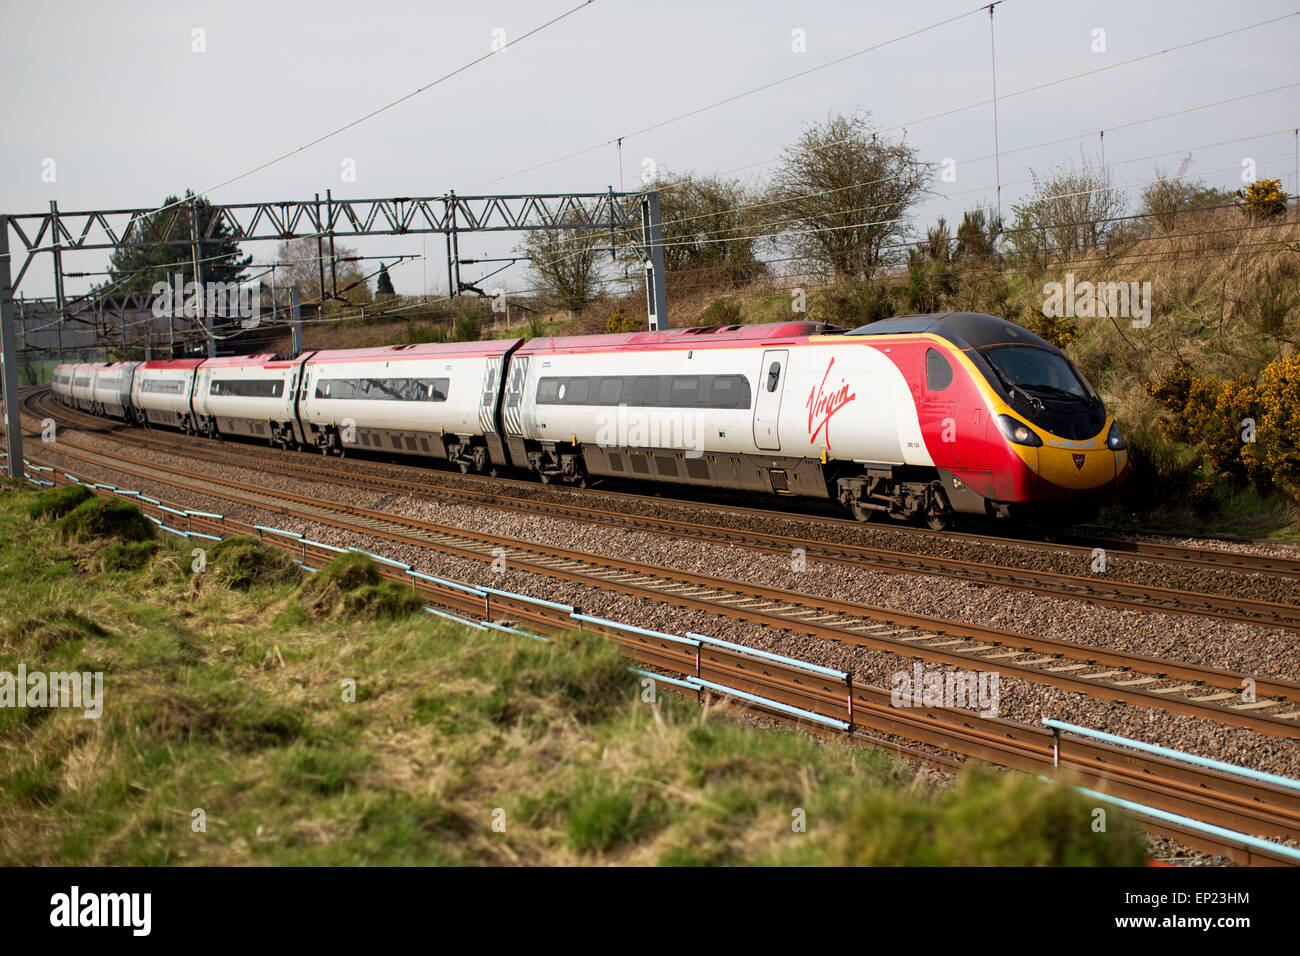 Virgin Rail high speed train in motion Stock Photo